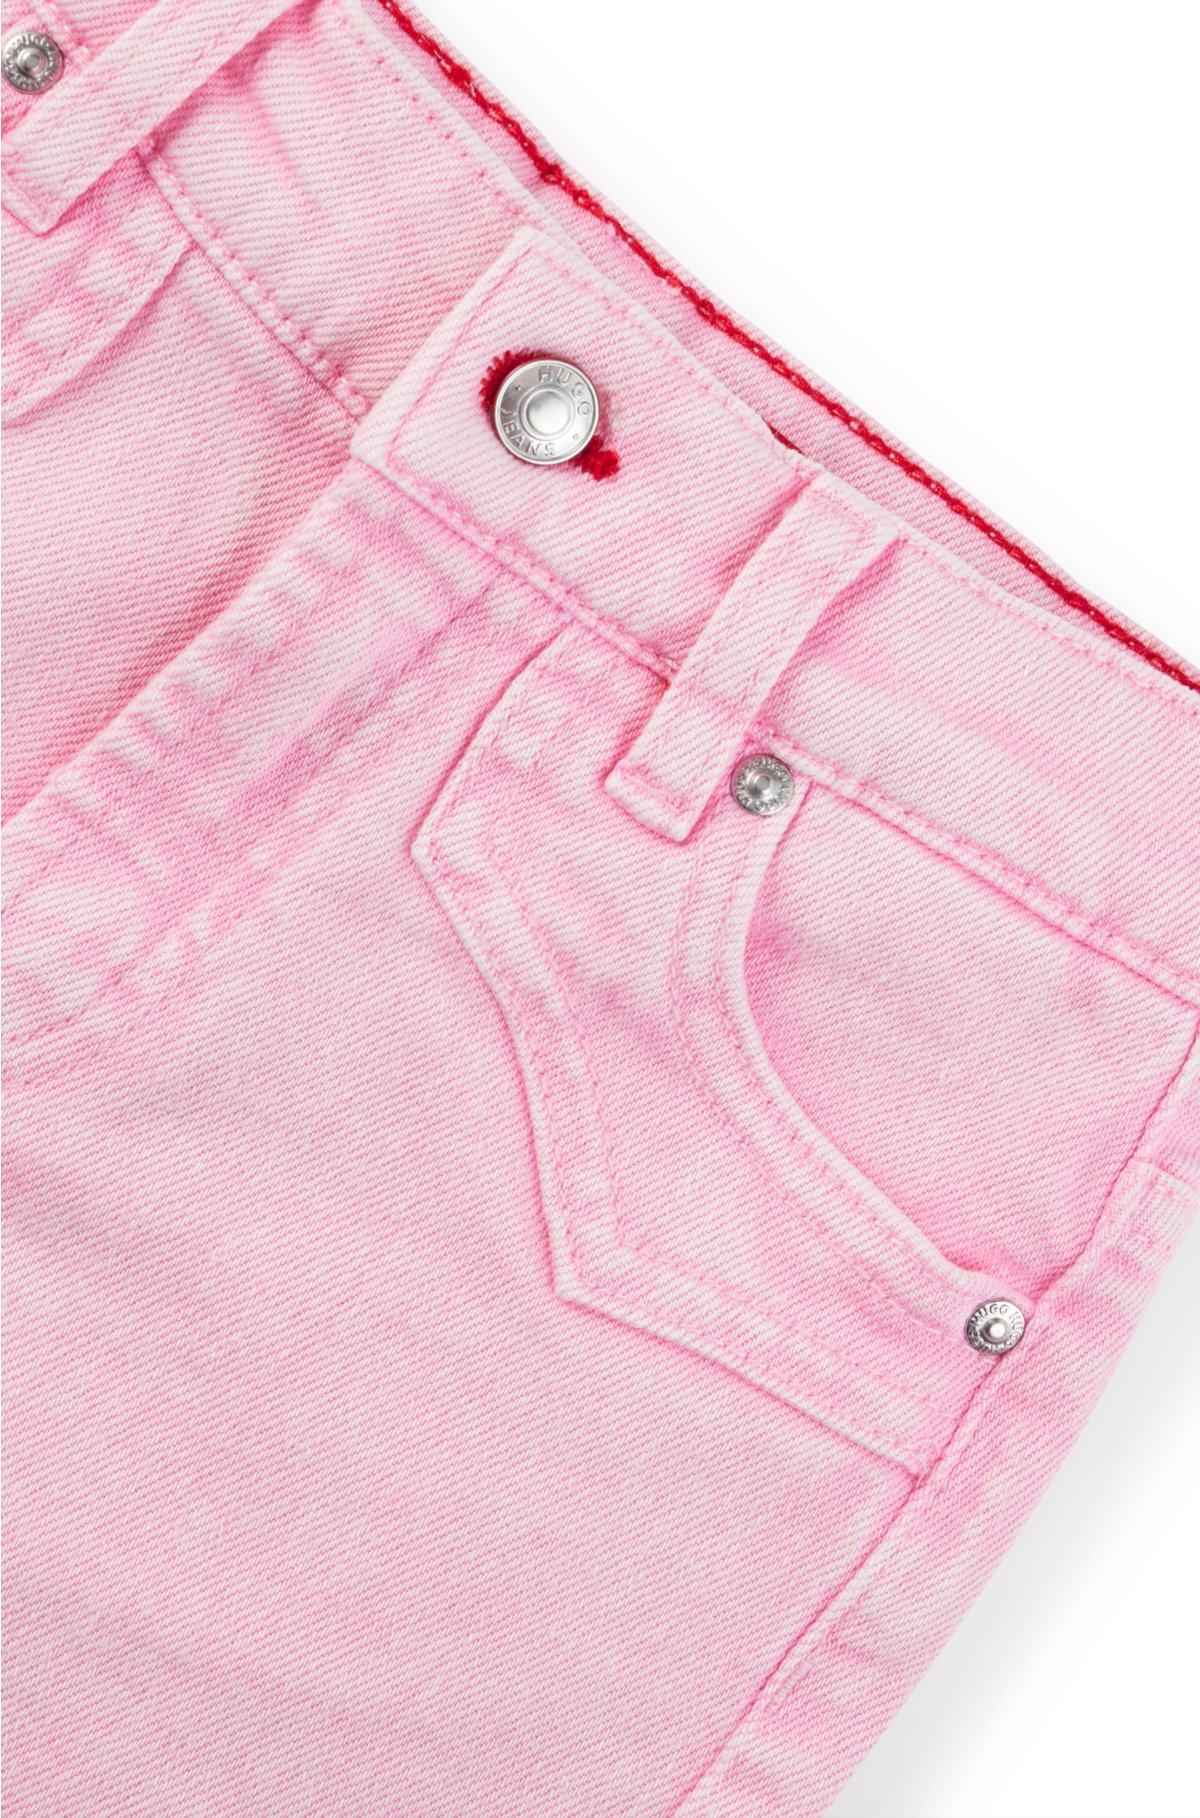 Kids' shorts in stretch denim with Western-inspired stitching, Pink